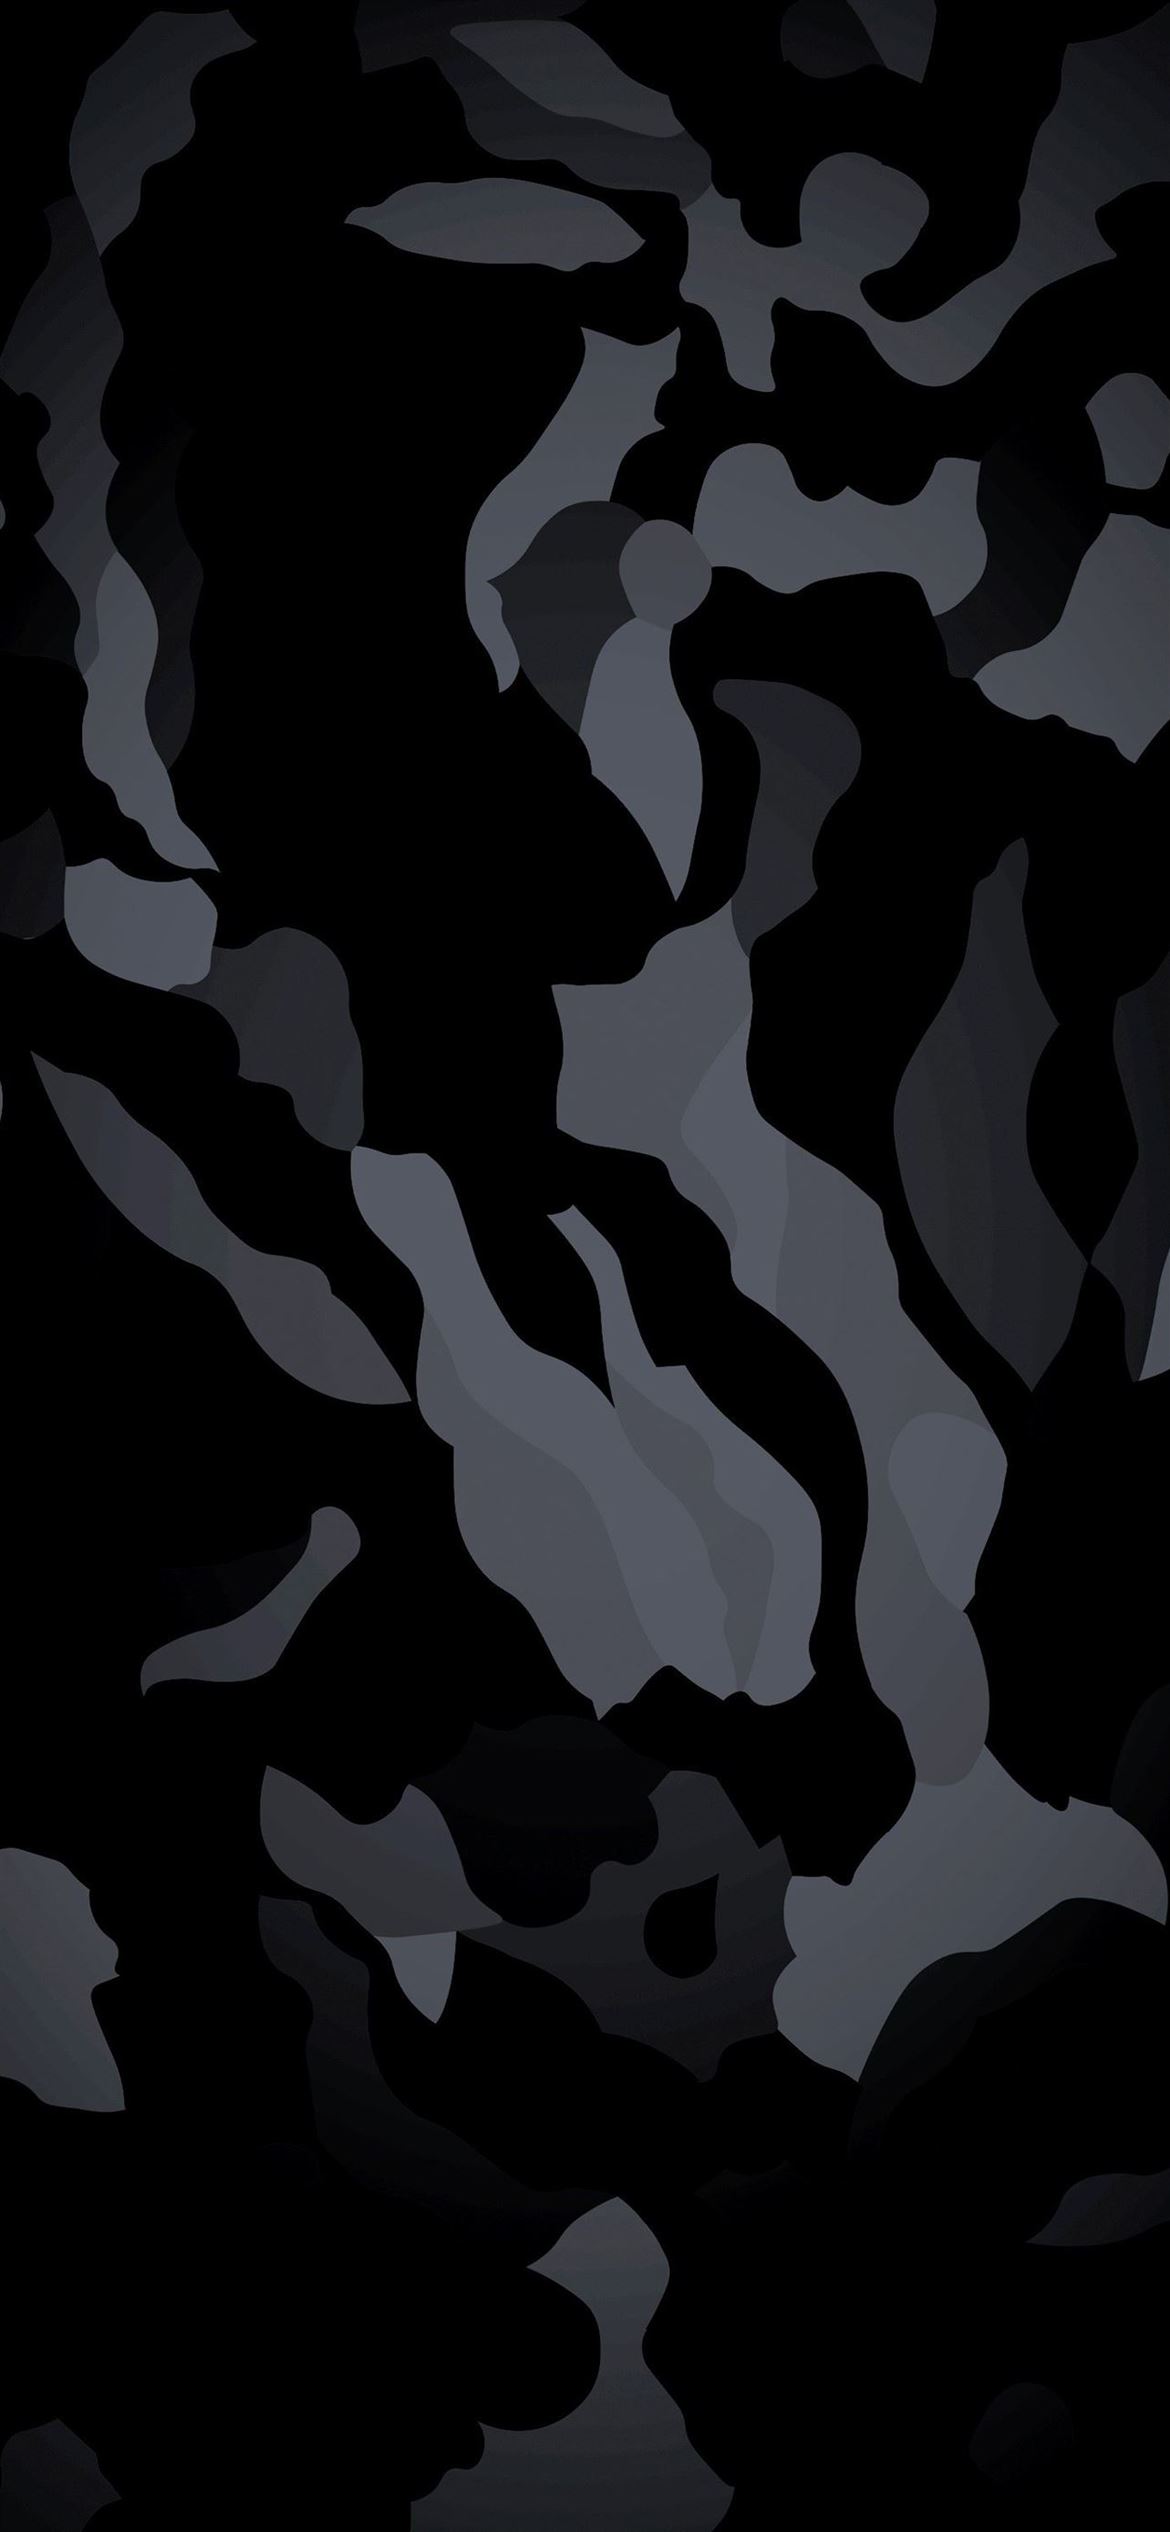 Black Pattern Military Camouflage Desig iPhone